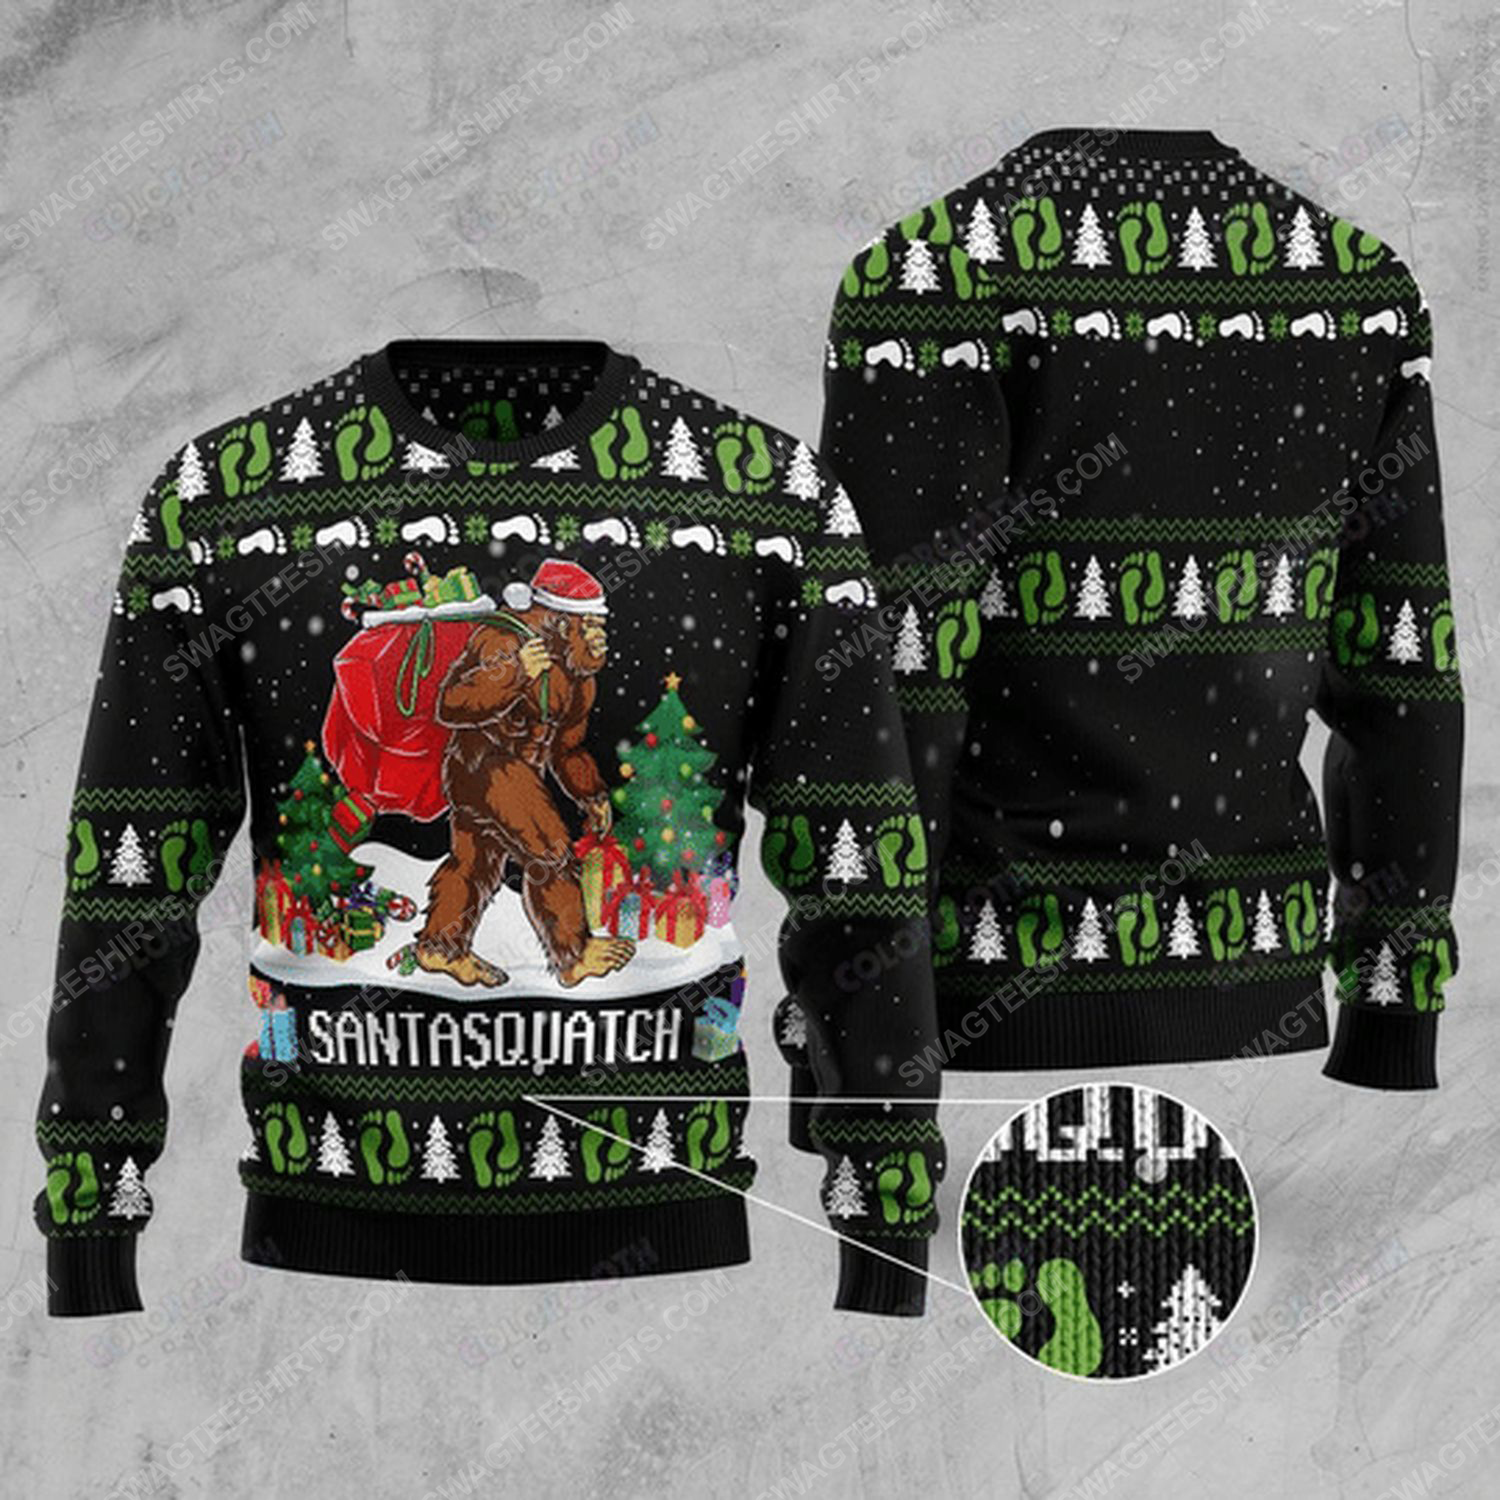 Bigfoot santasquatch ugly christmas sweater